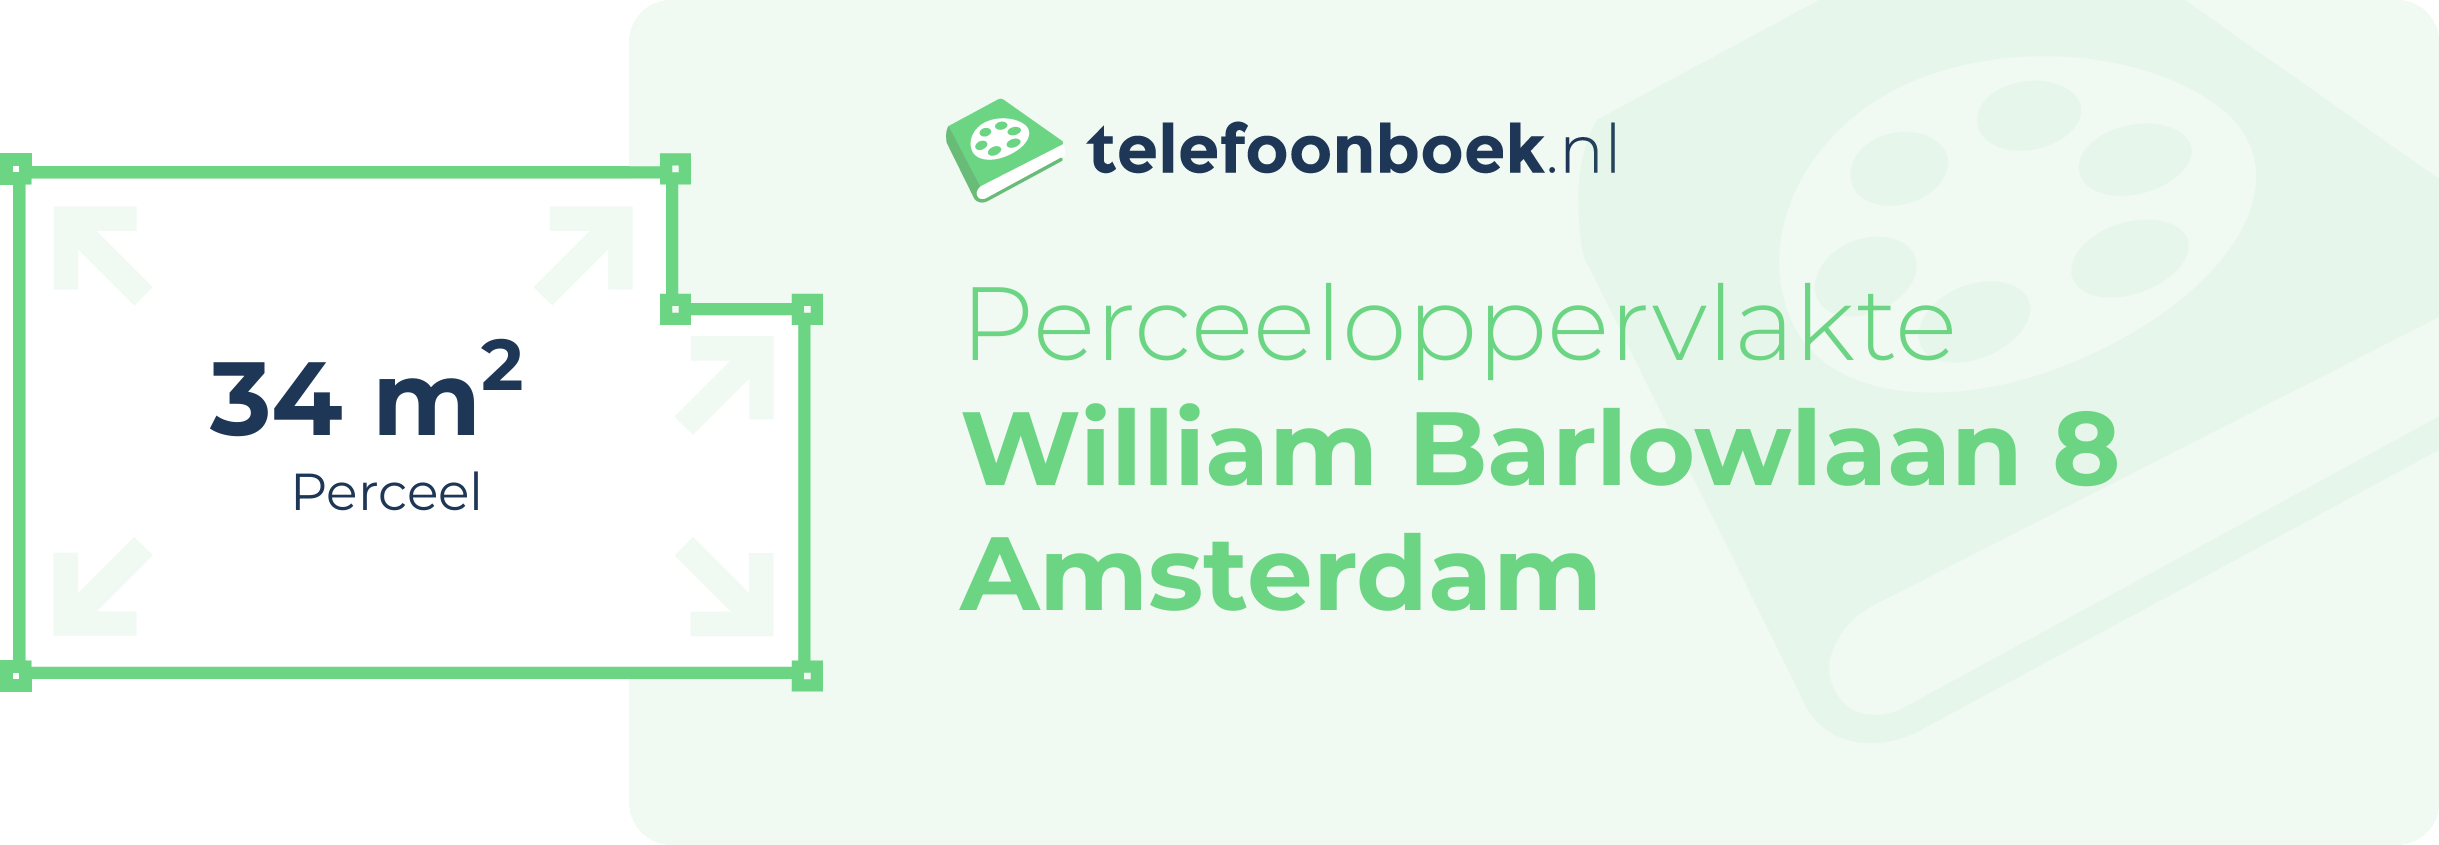 Perceeloppervlakte William Barlowlaan 8 Amsterdam